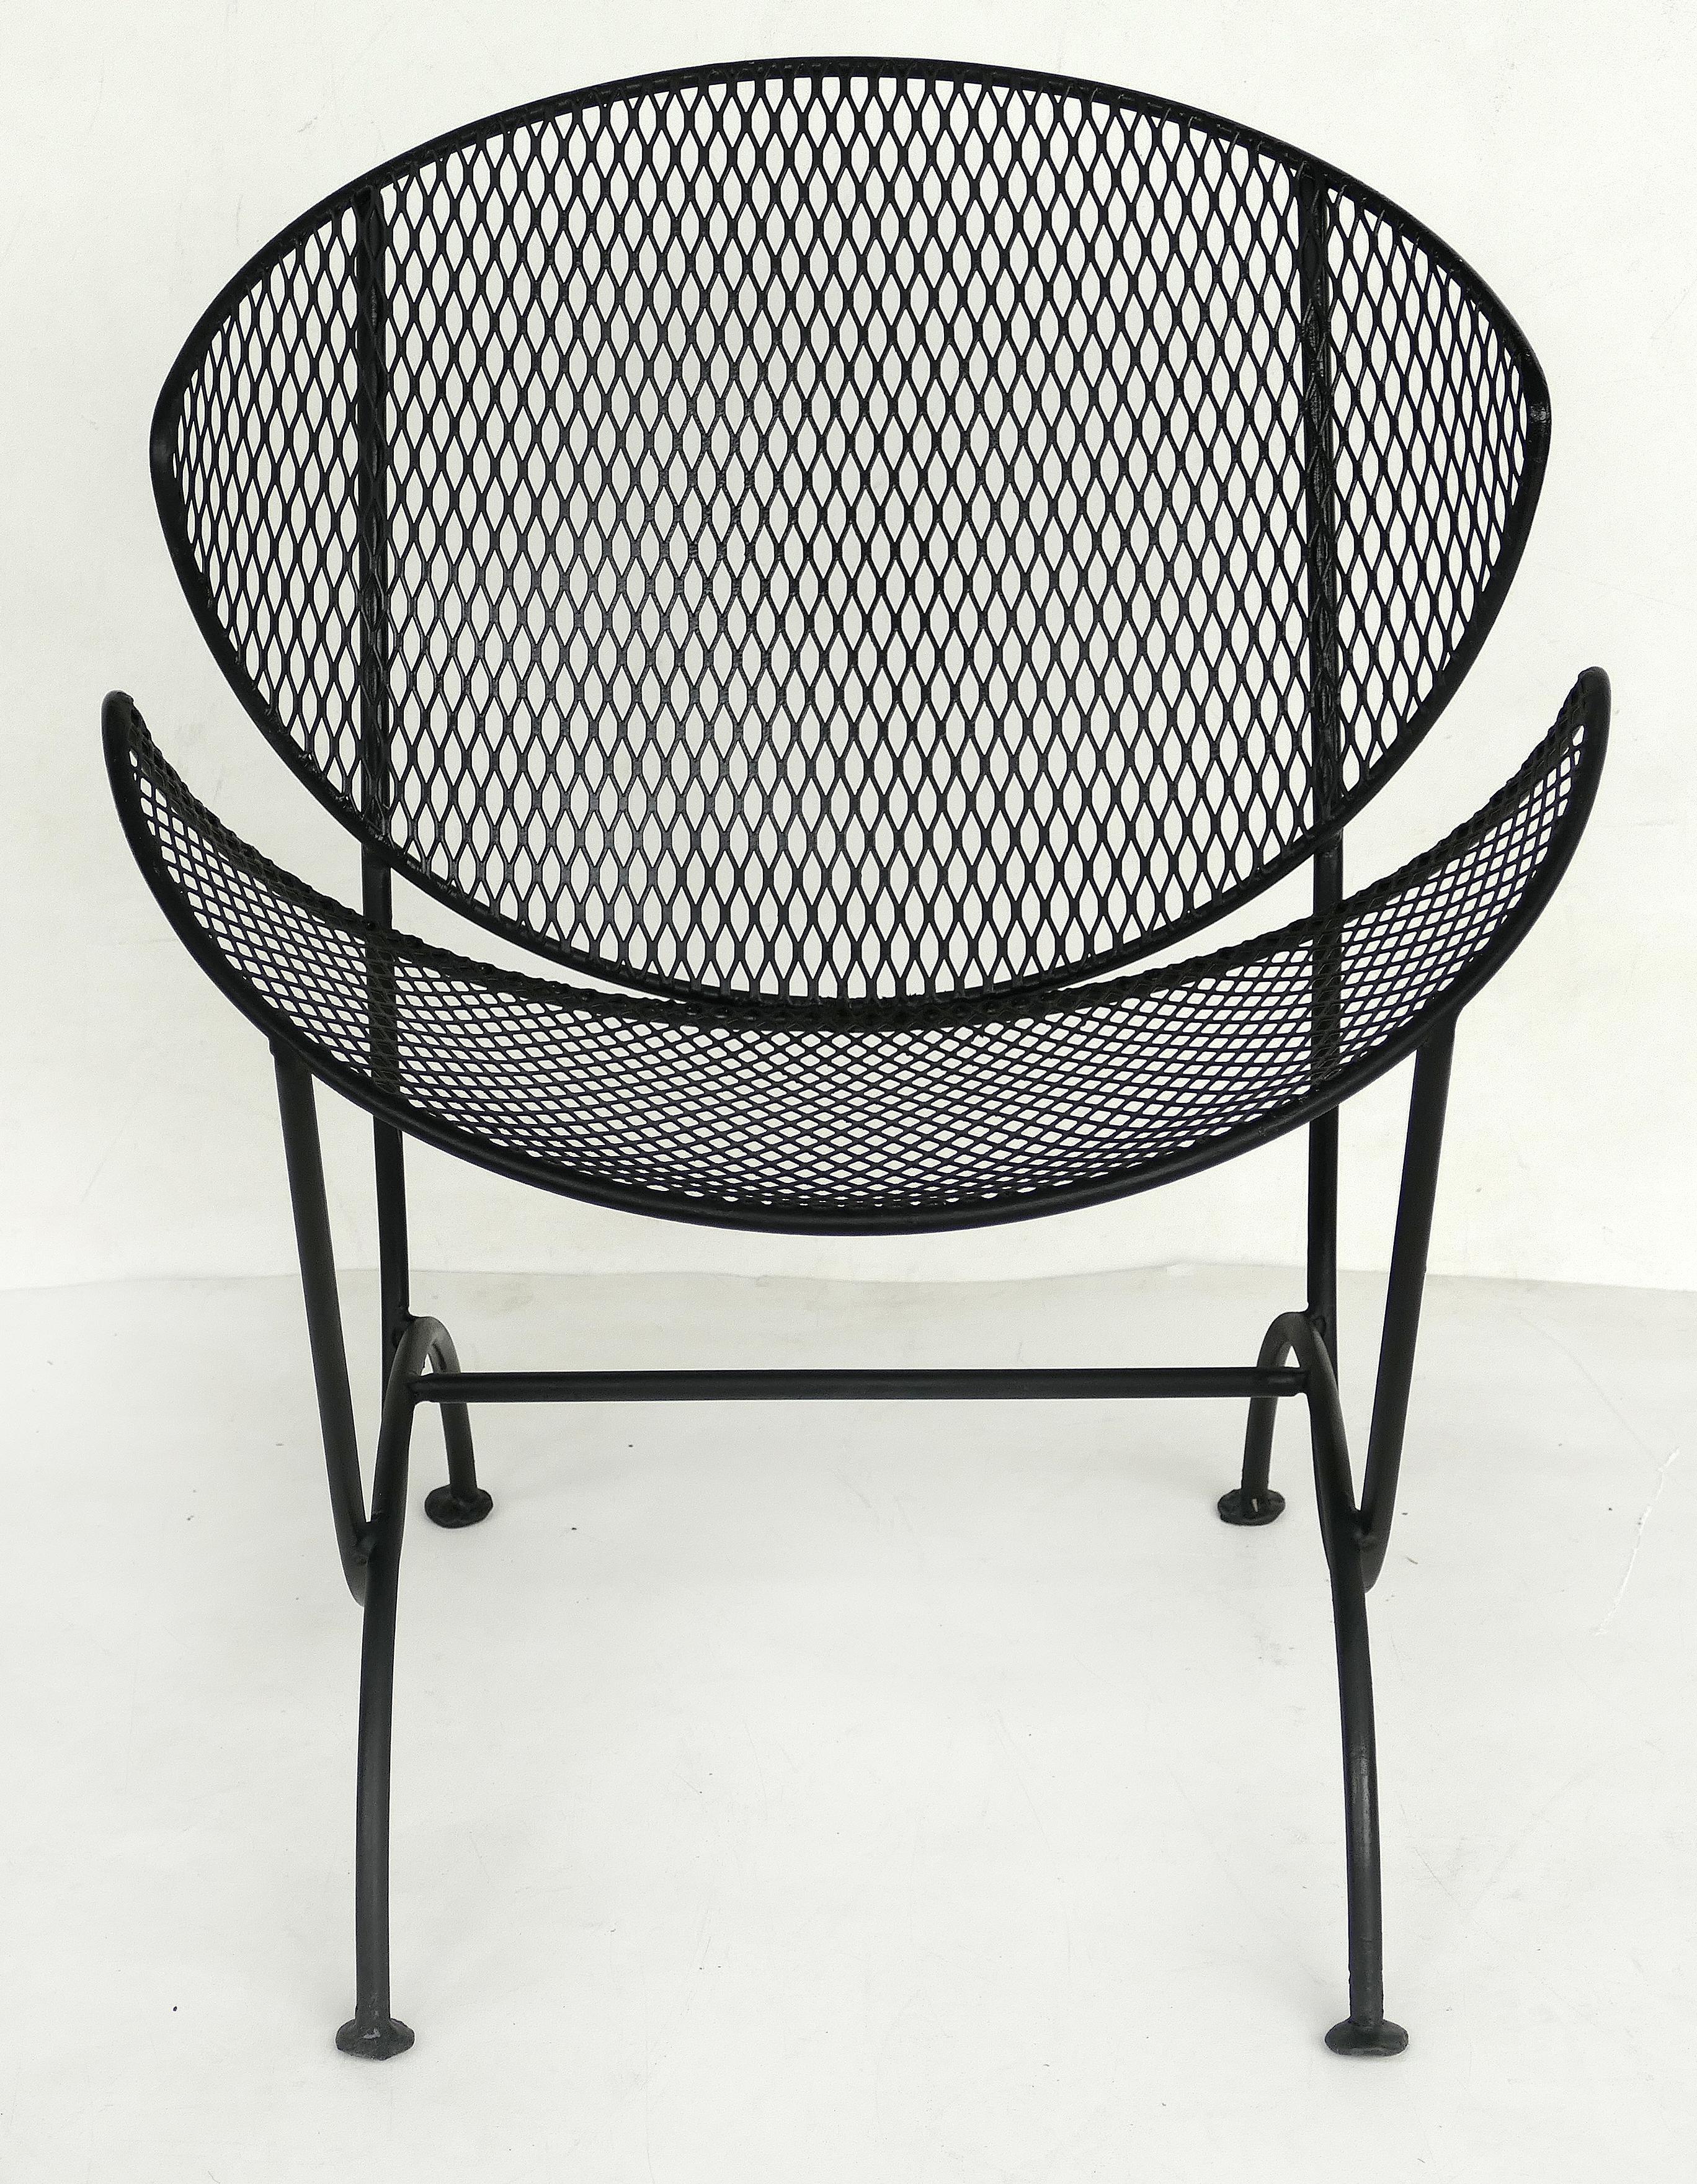 Maurizio Tempestini for Salterini wrought iron chairs, 